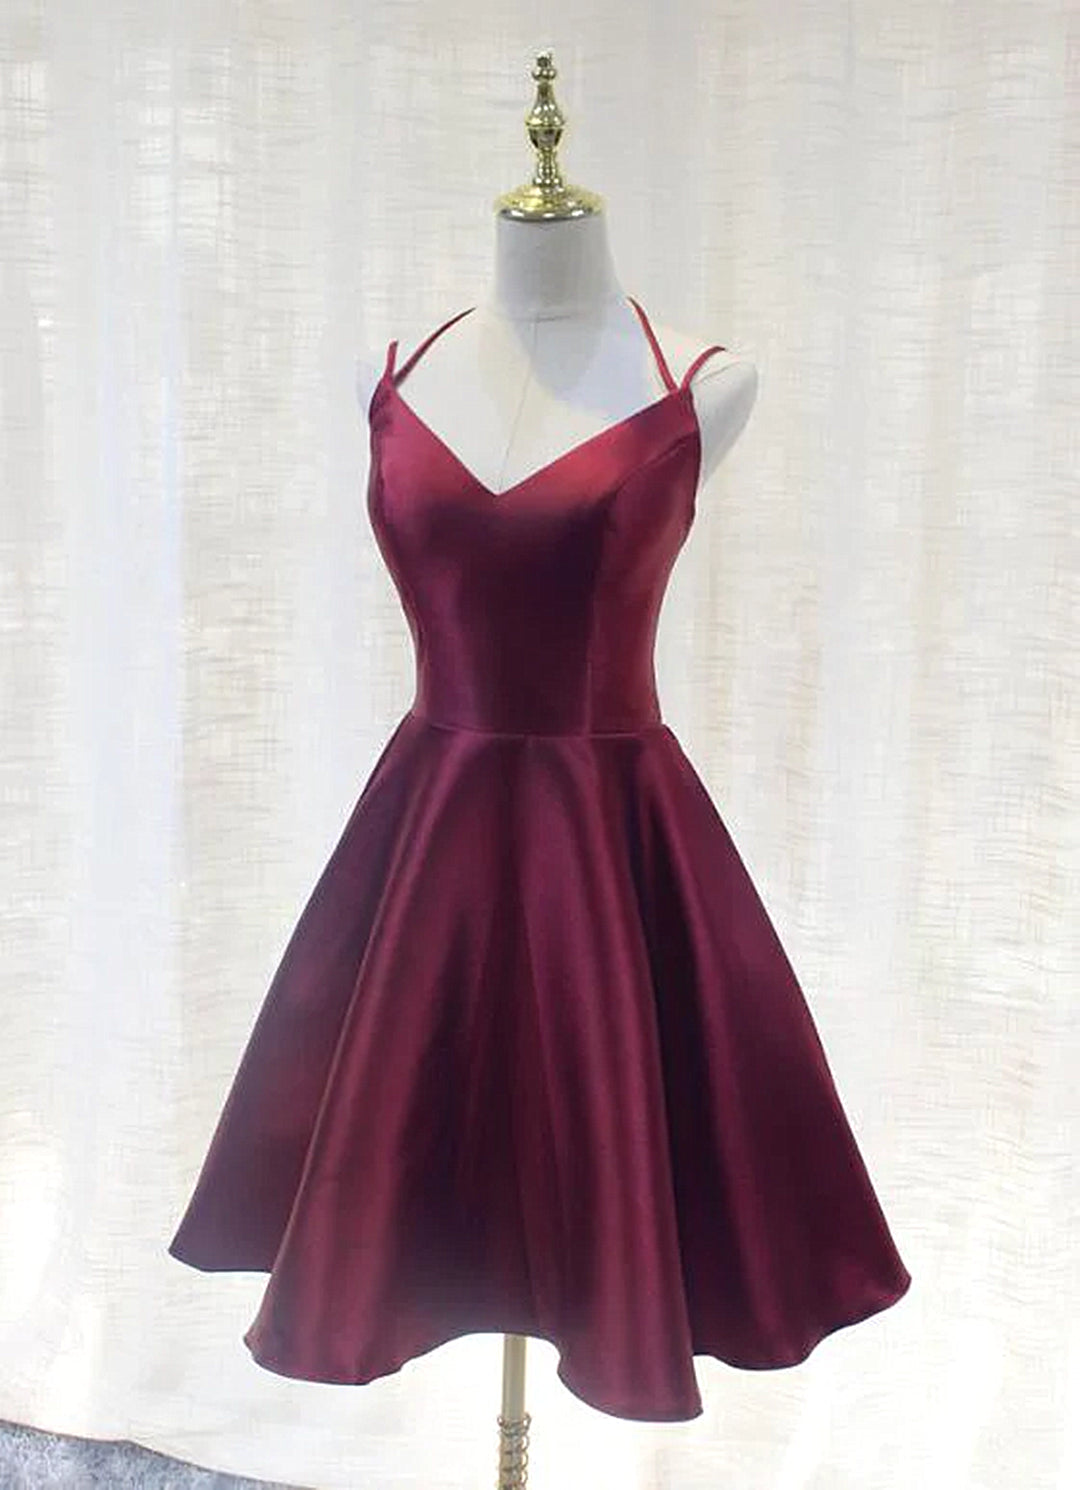 Burgundy Straps V-neckline Short Party Dress , Lovely Satin Corset Homecoming Dress outfit, Prom Dress A Line